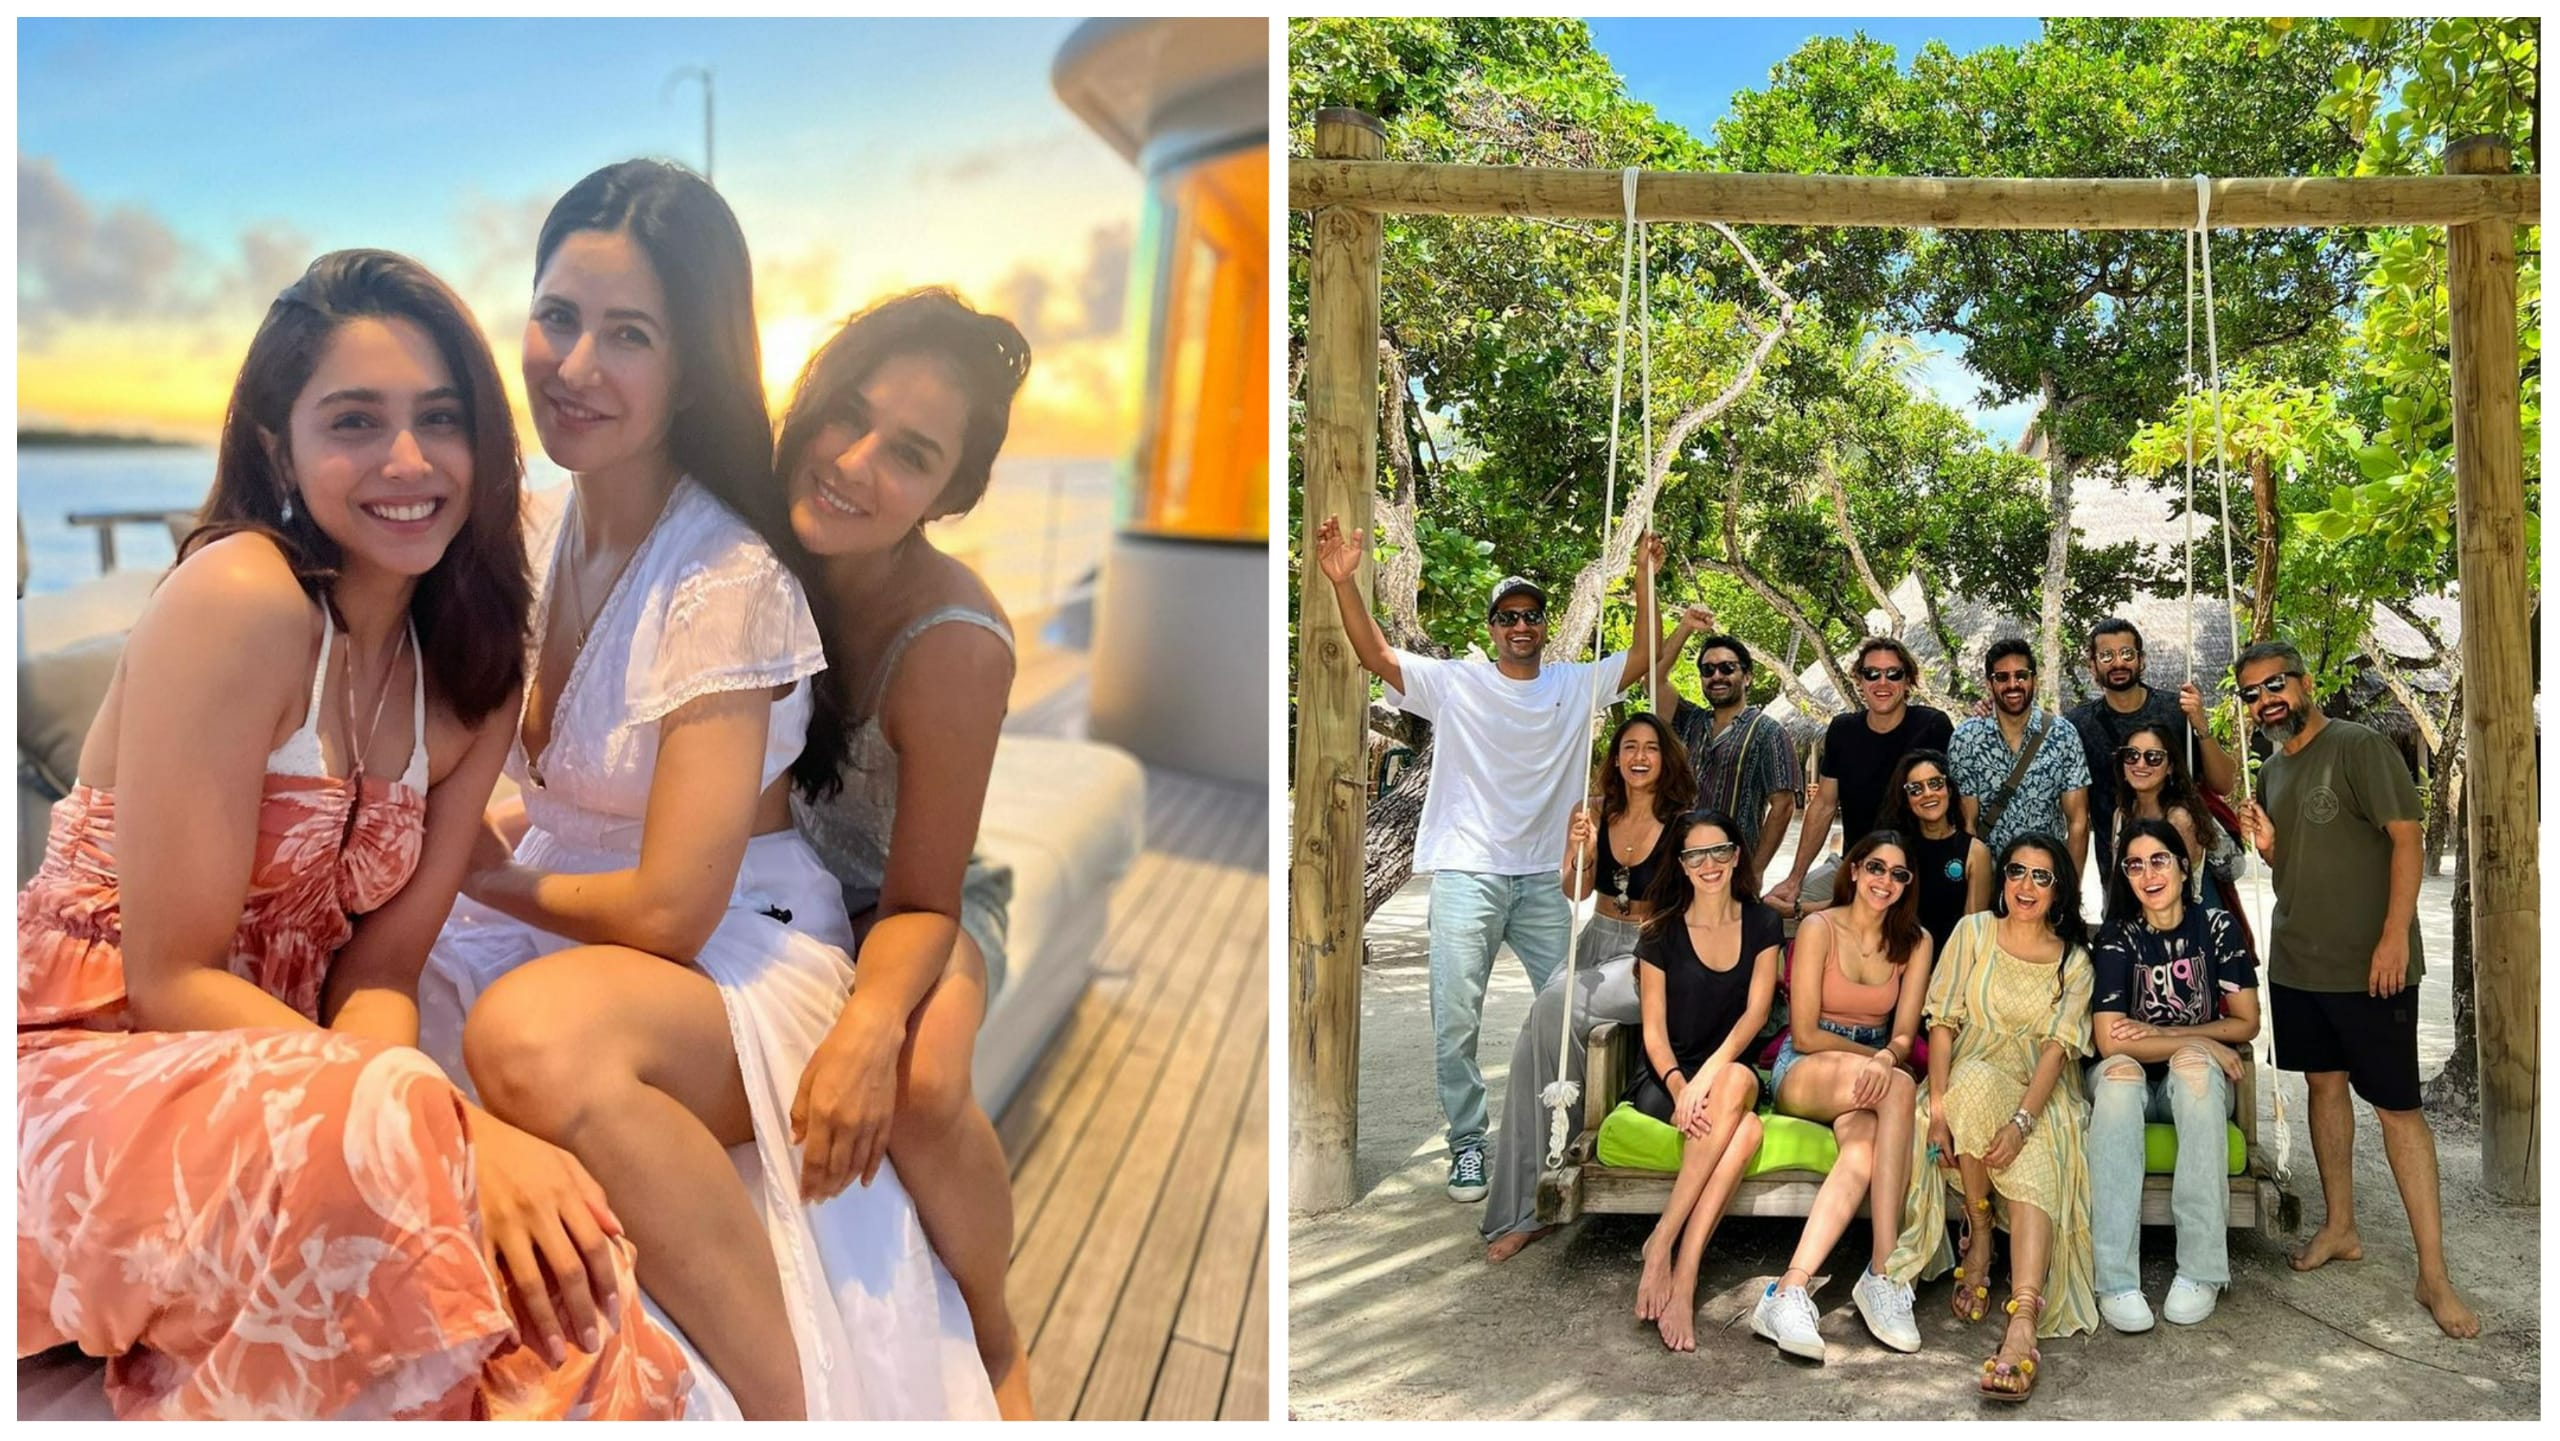 Sharvari Wagh shares more fun pics with Vicky Kaushal, Katrina Kaif, Ileana D'Cruz from Maldives vacation. See here